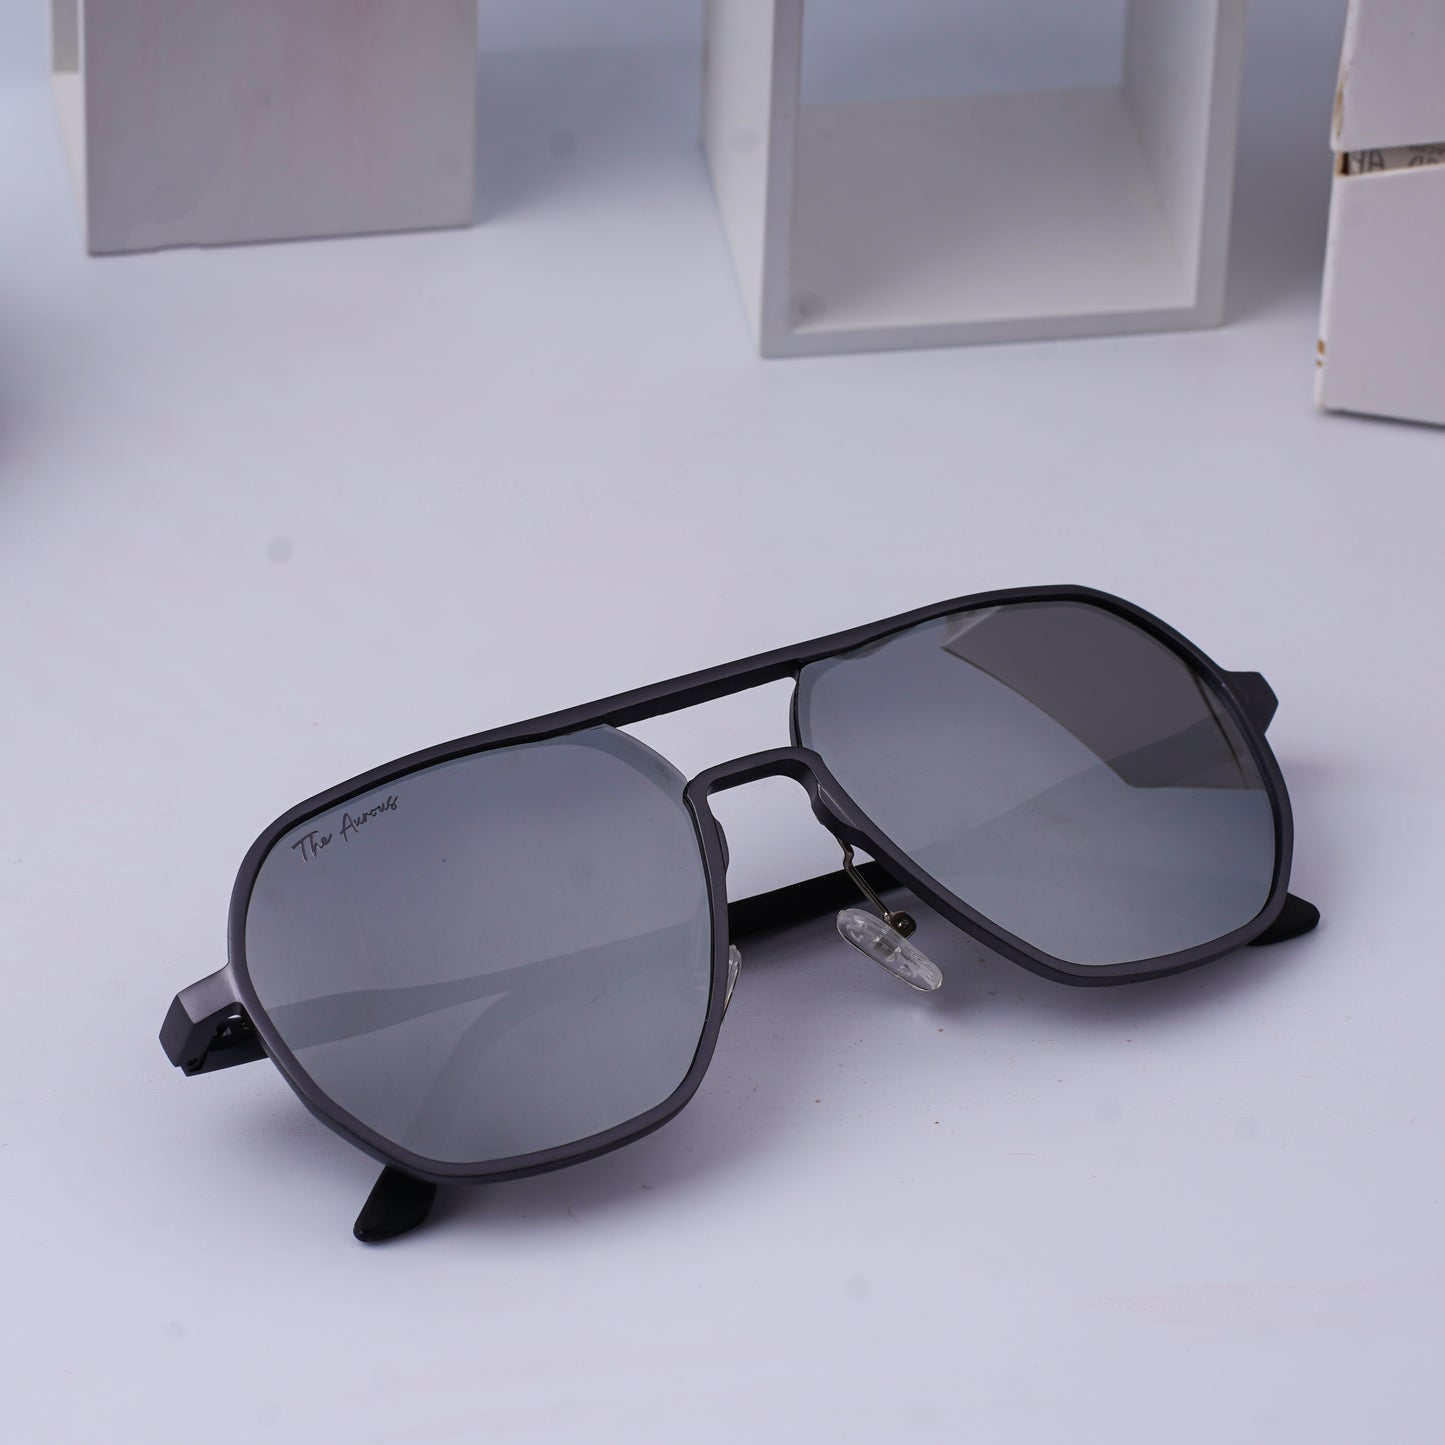 The Aurous Al-Mg Premium Polarized Sunglasses